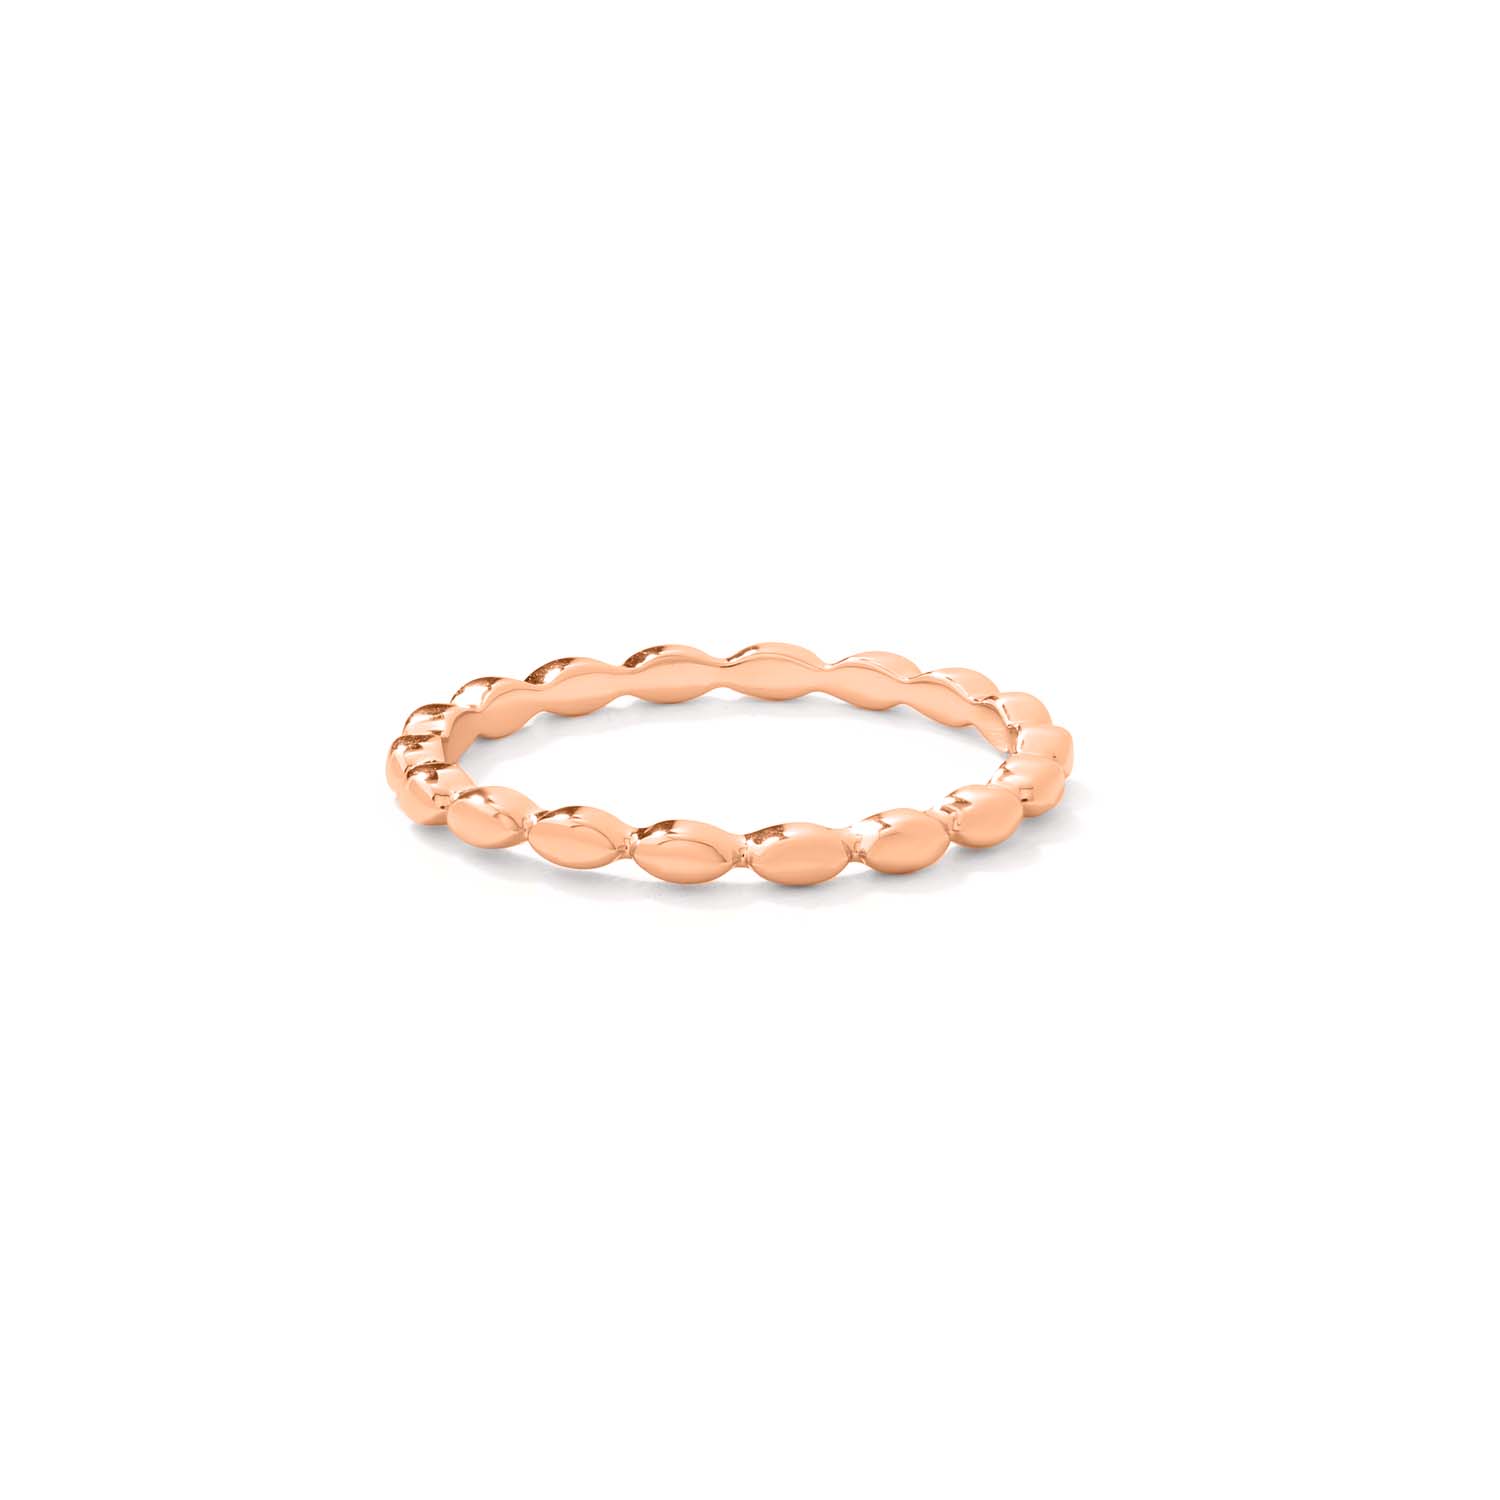 Elegant and minimalist rose gold ring.